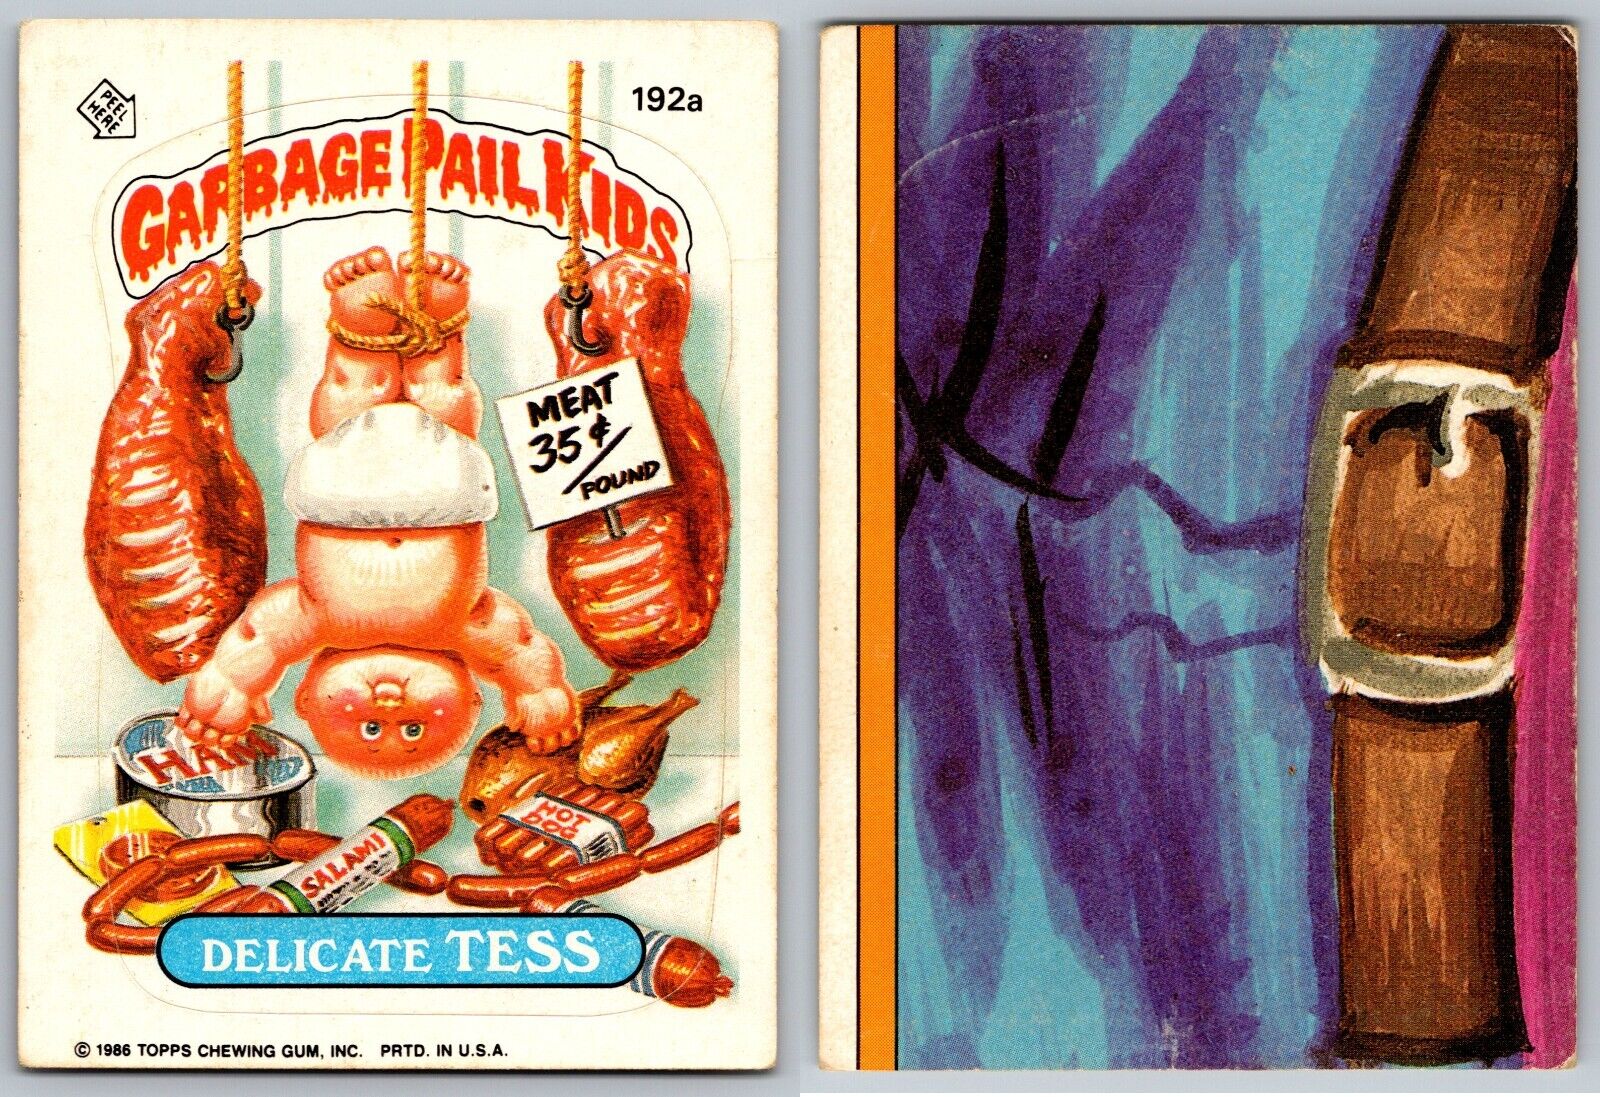 1986 Topps Garbage Pail Kids GPK Series 5 OS5 Delicate TESS 192a Vintage Card